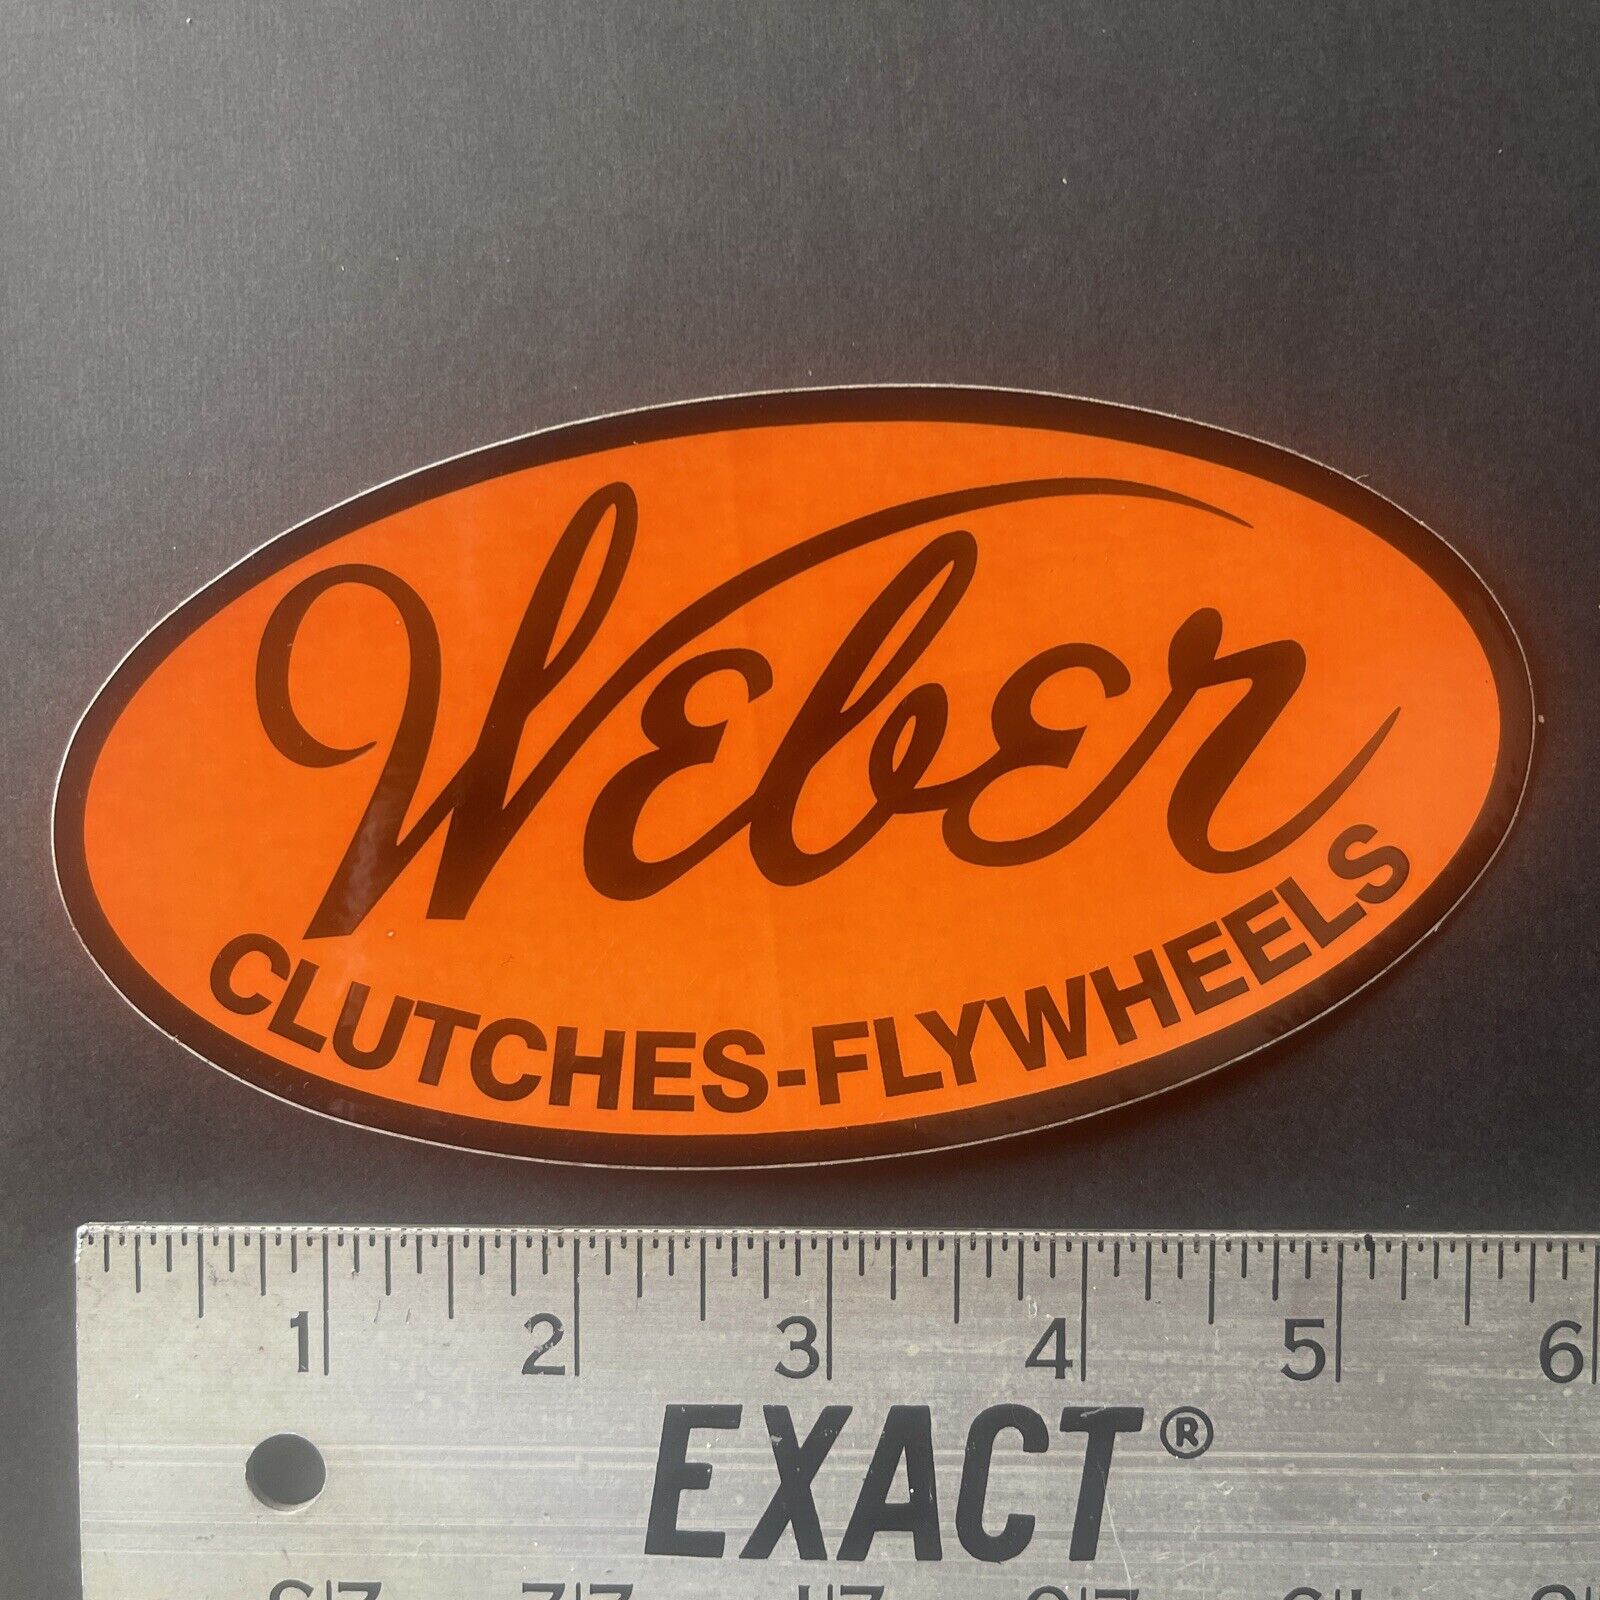 * VTG *   Weber  Clutches - Flywheels - decal/sticker